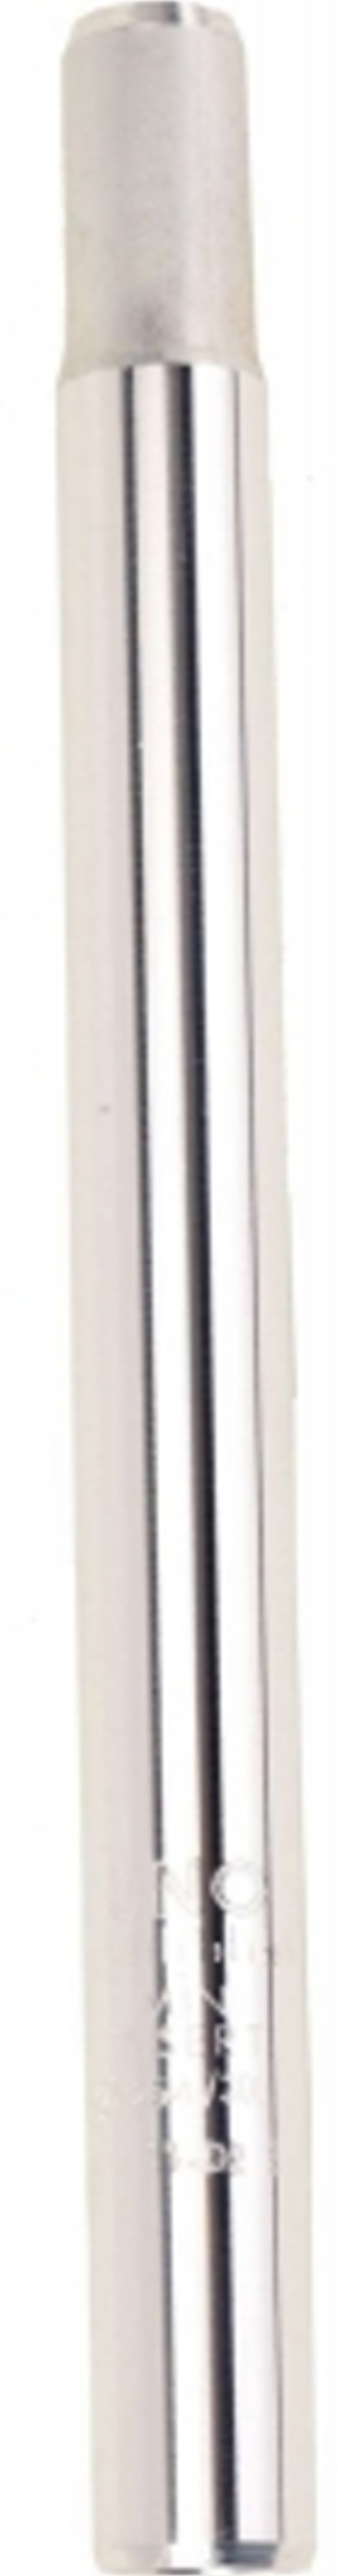 Fuxon Kerze 25,4/300 Alu CNC silber